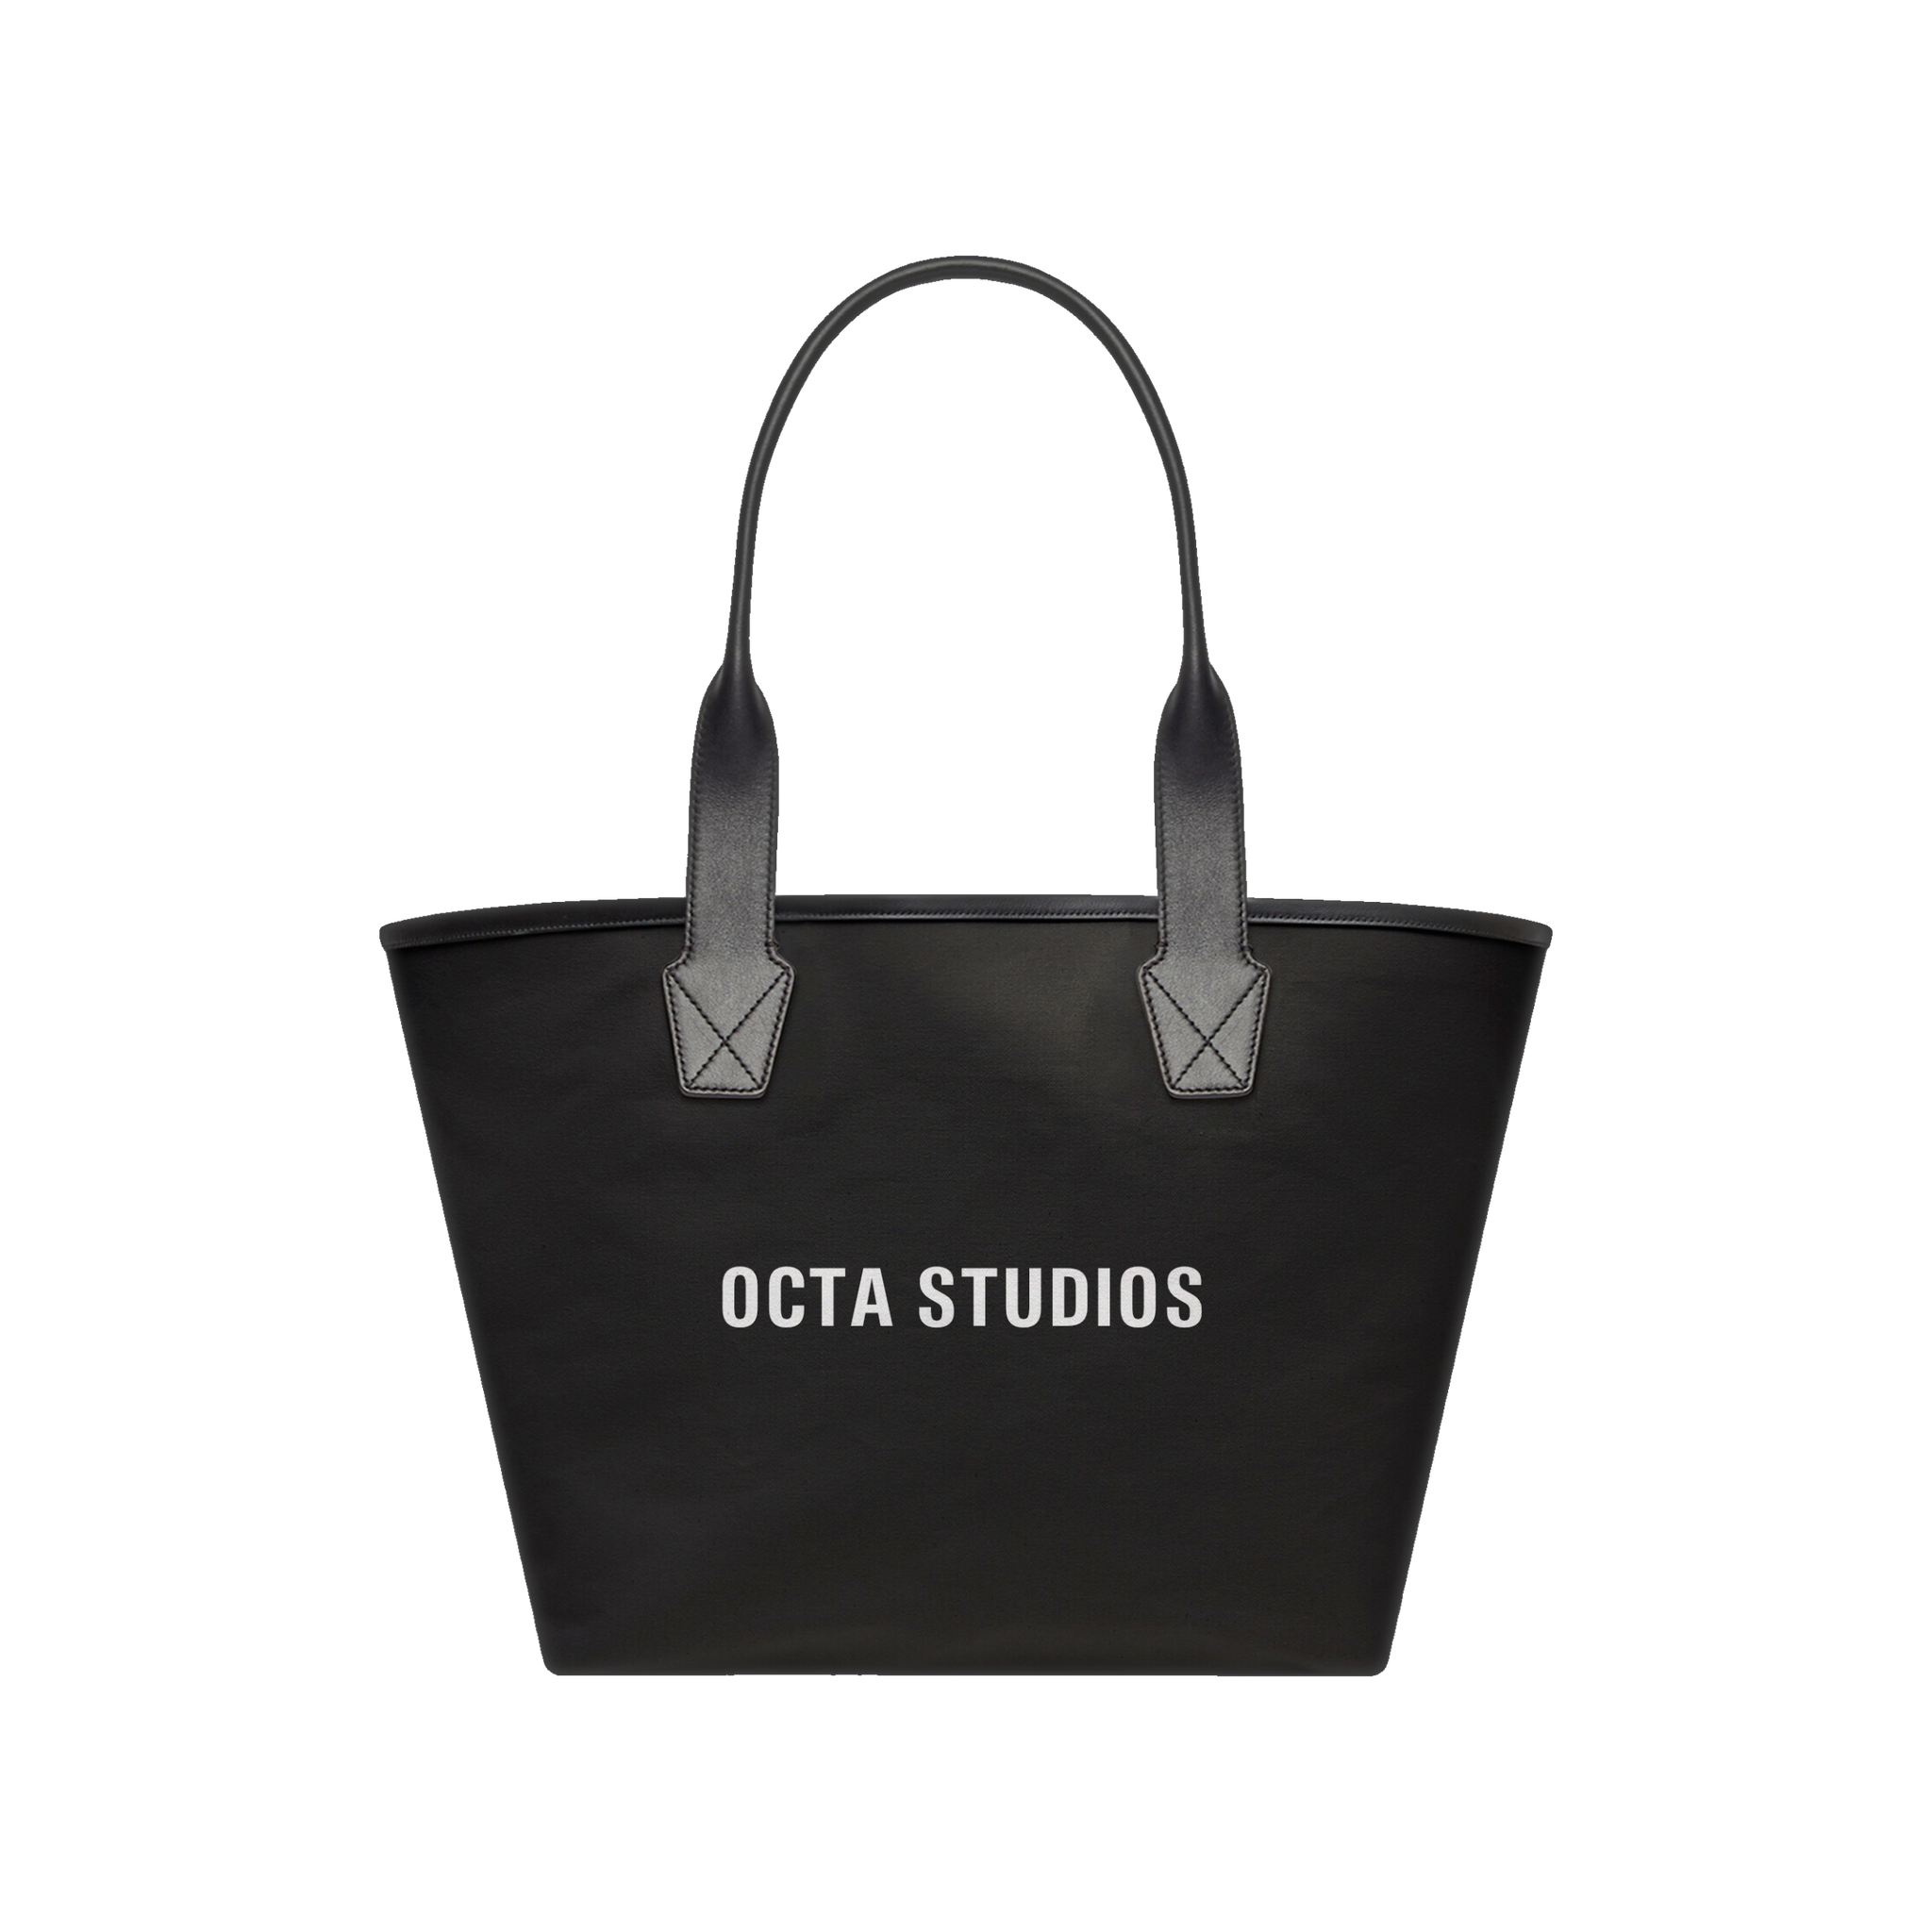 Octa Tote Bag Mockup